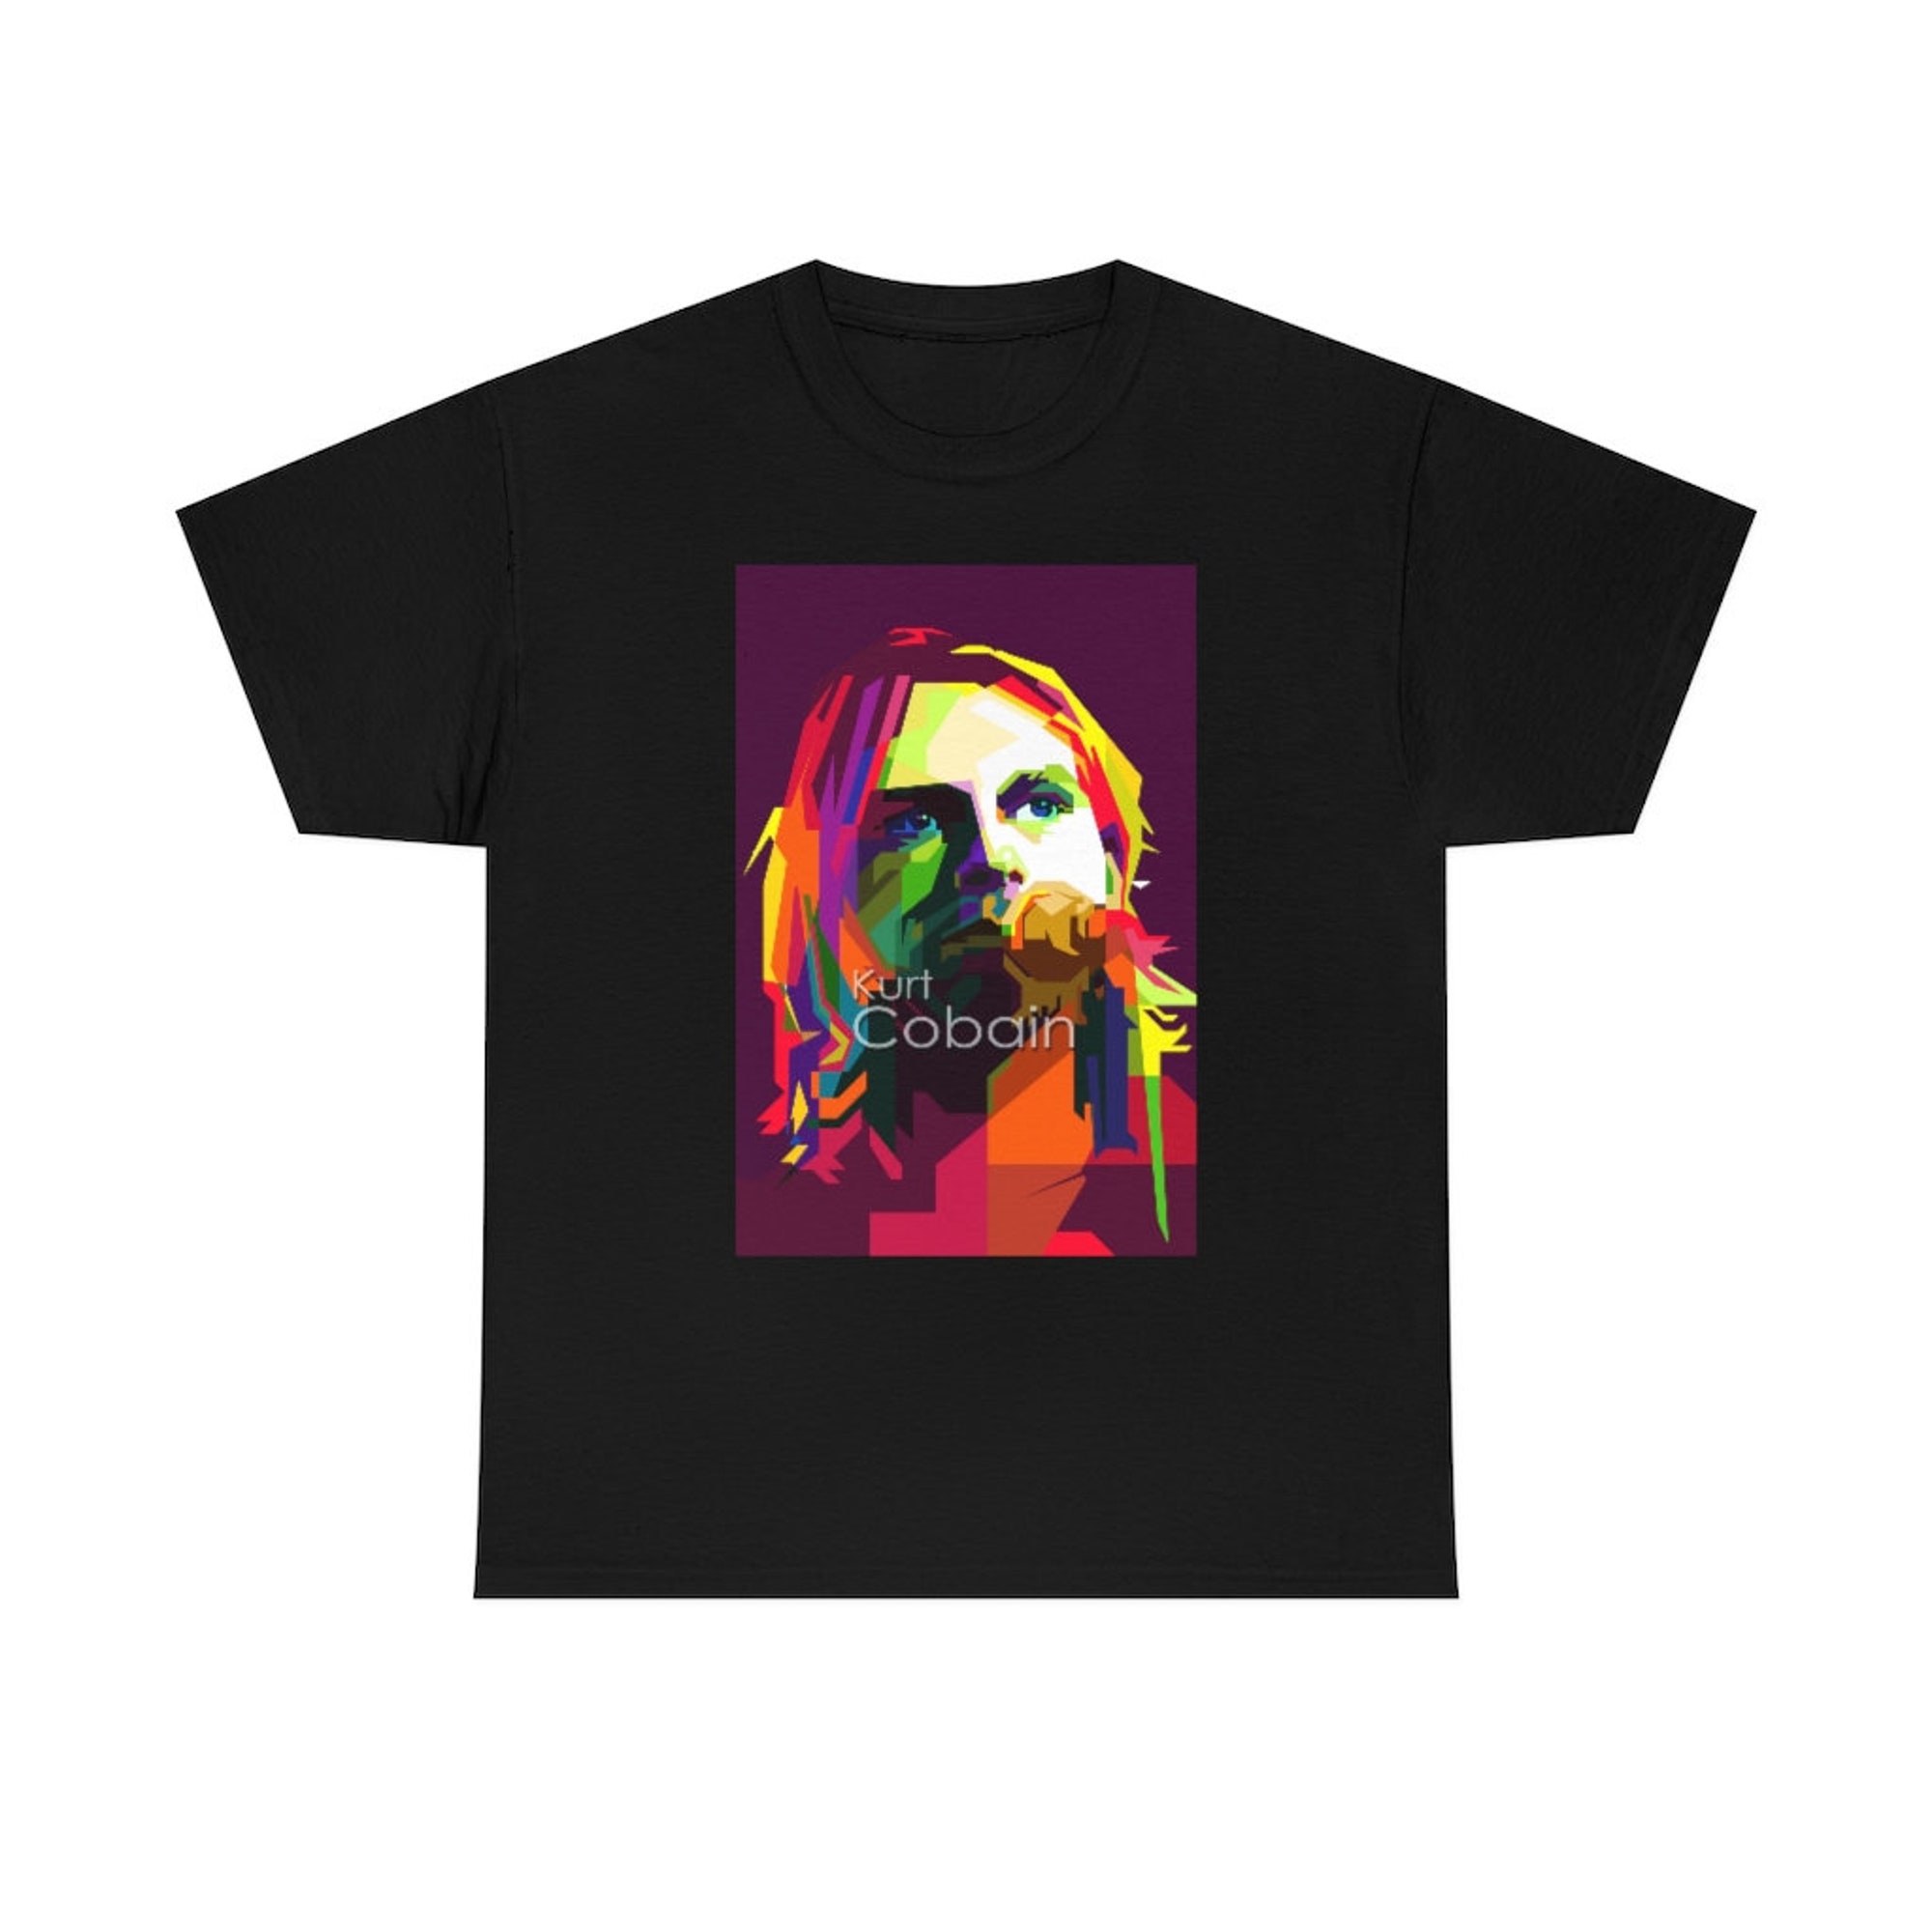 Discover Maglietta T-Shirt Kurt Cobain Uomo Donna Bambini Pop Art